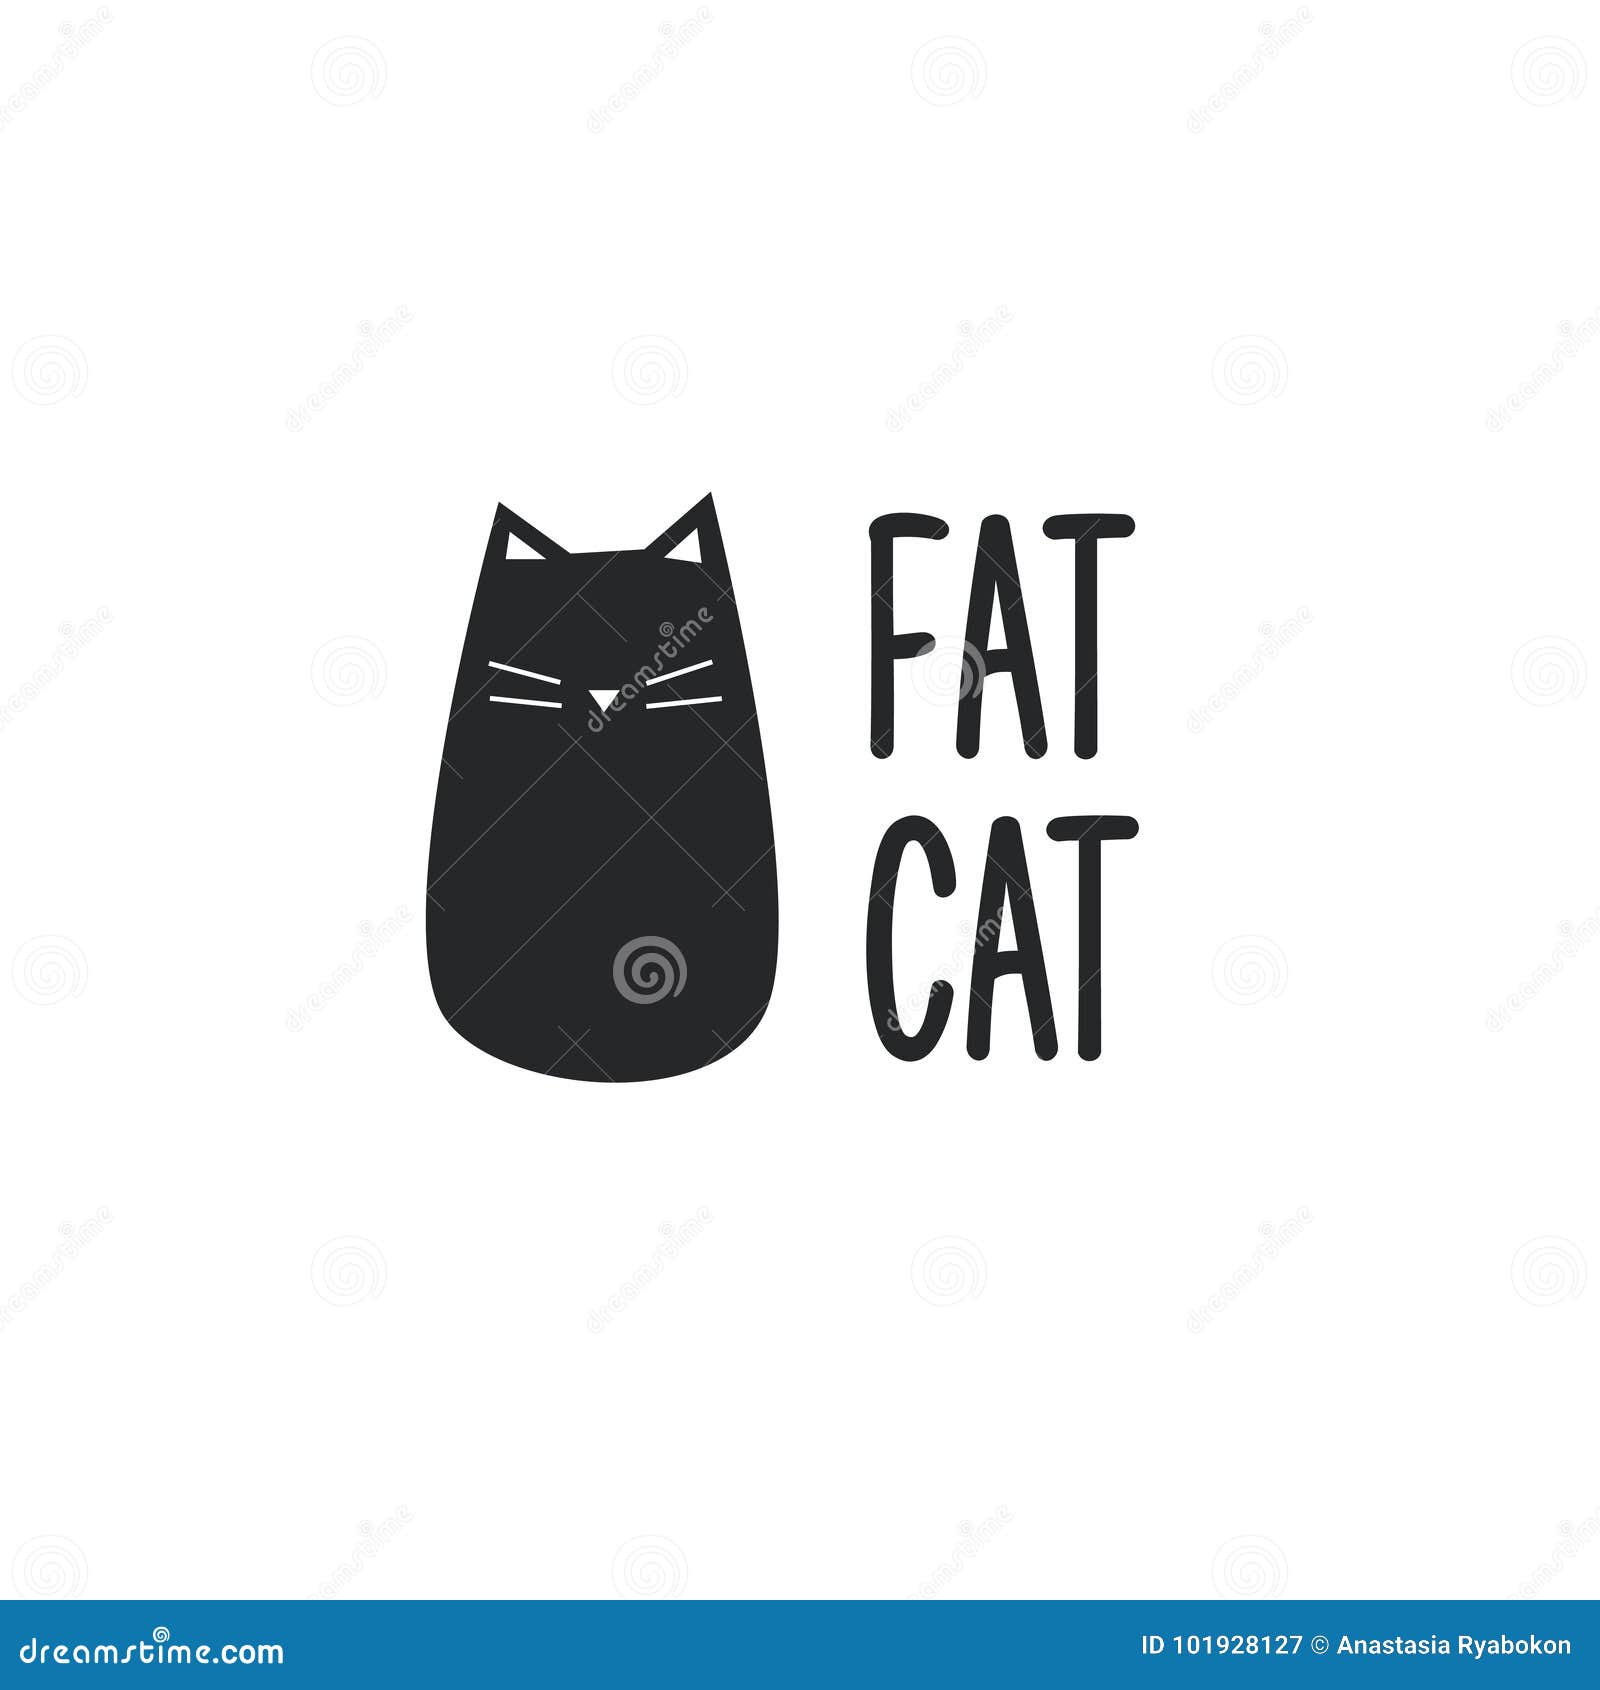 Funny cat logo vector stock vector. Illustration of sign - 101928127